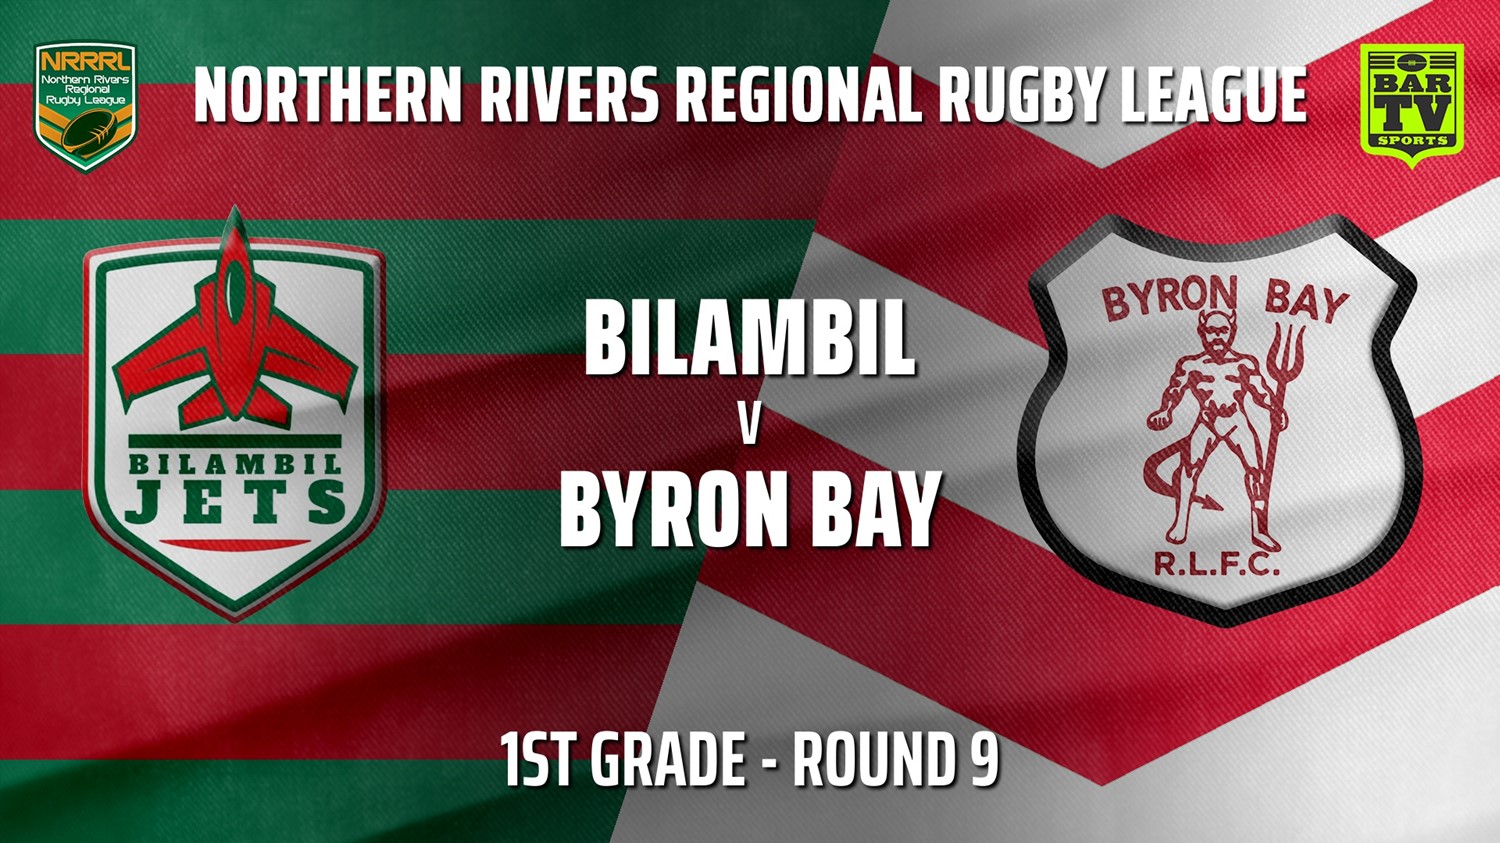 210704-Northern Rivers Round 9 - 1st Grade - Bilambil Jets v Byron Bay Red Devils Minigame Slate Image